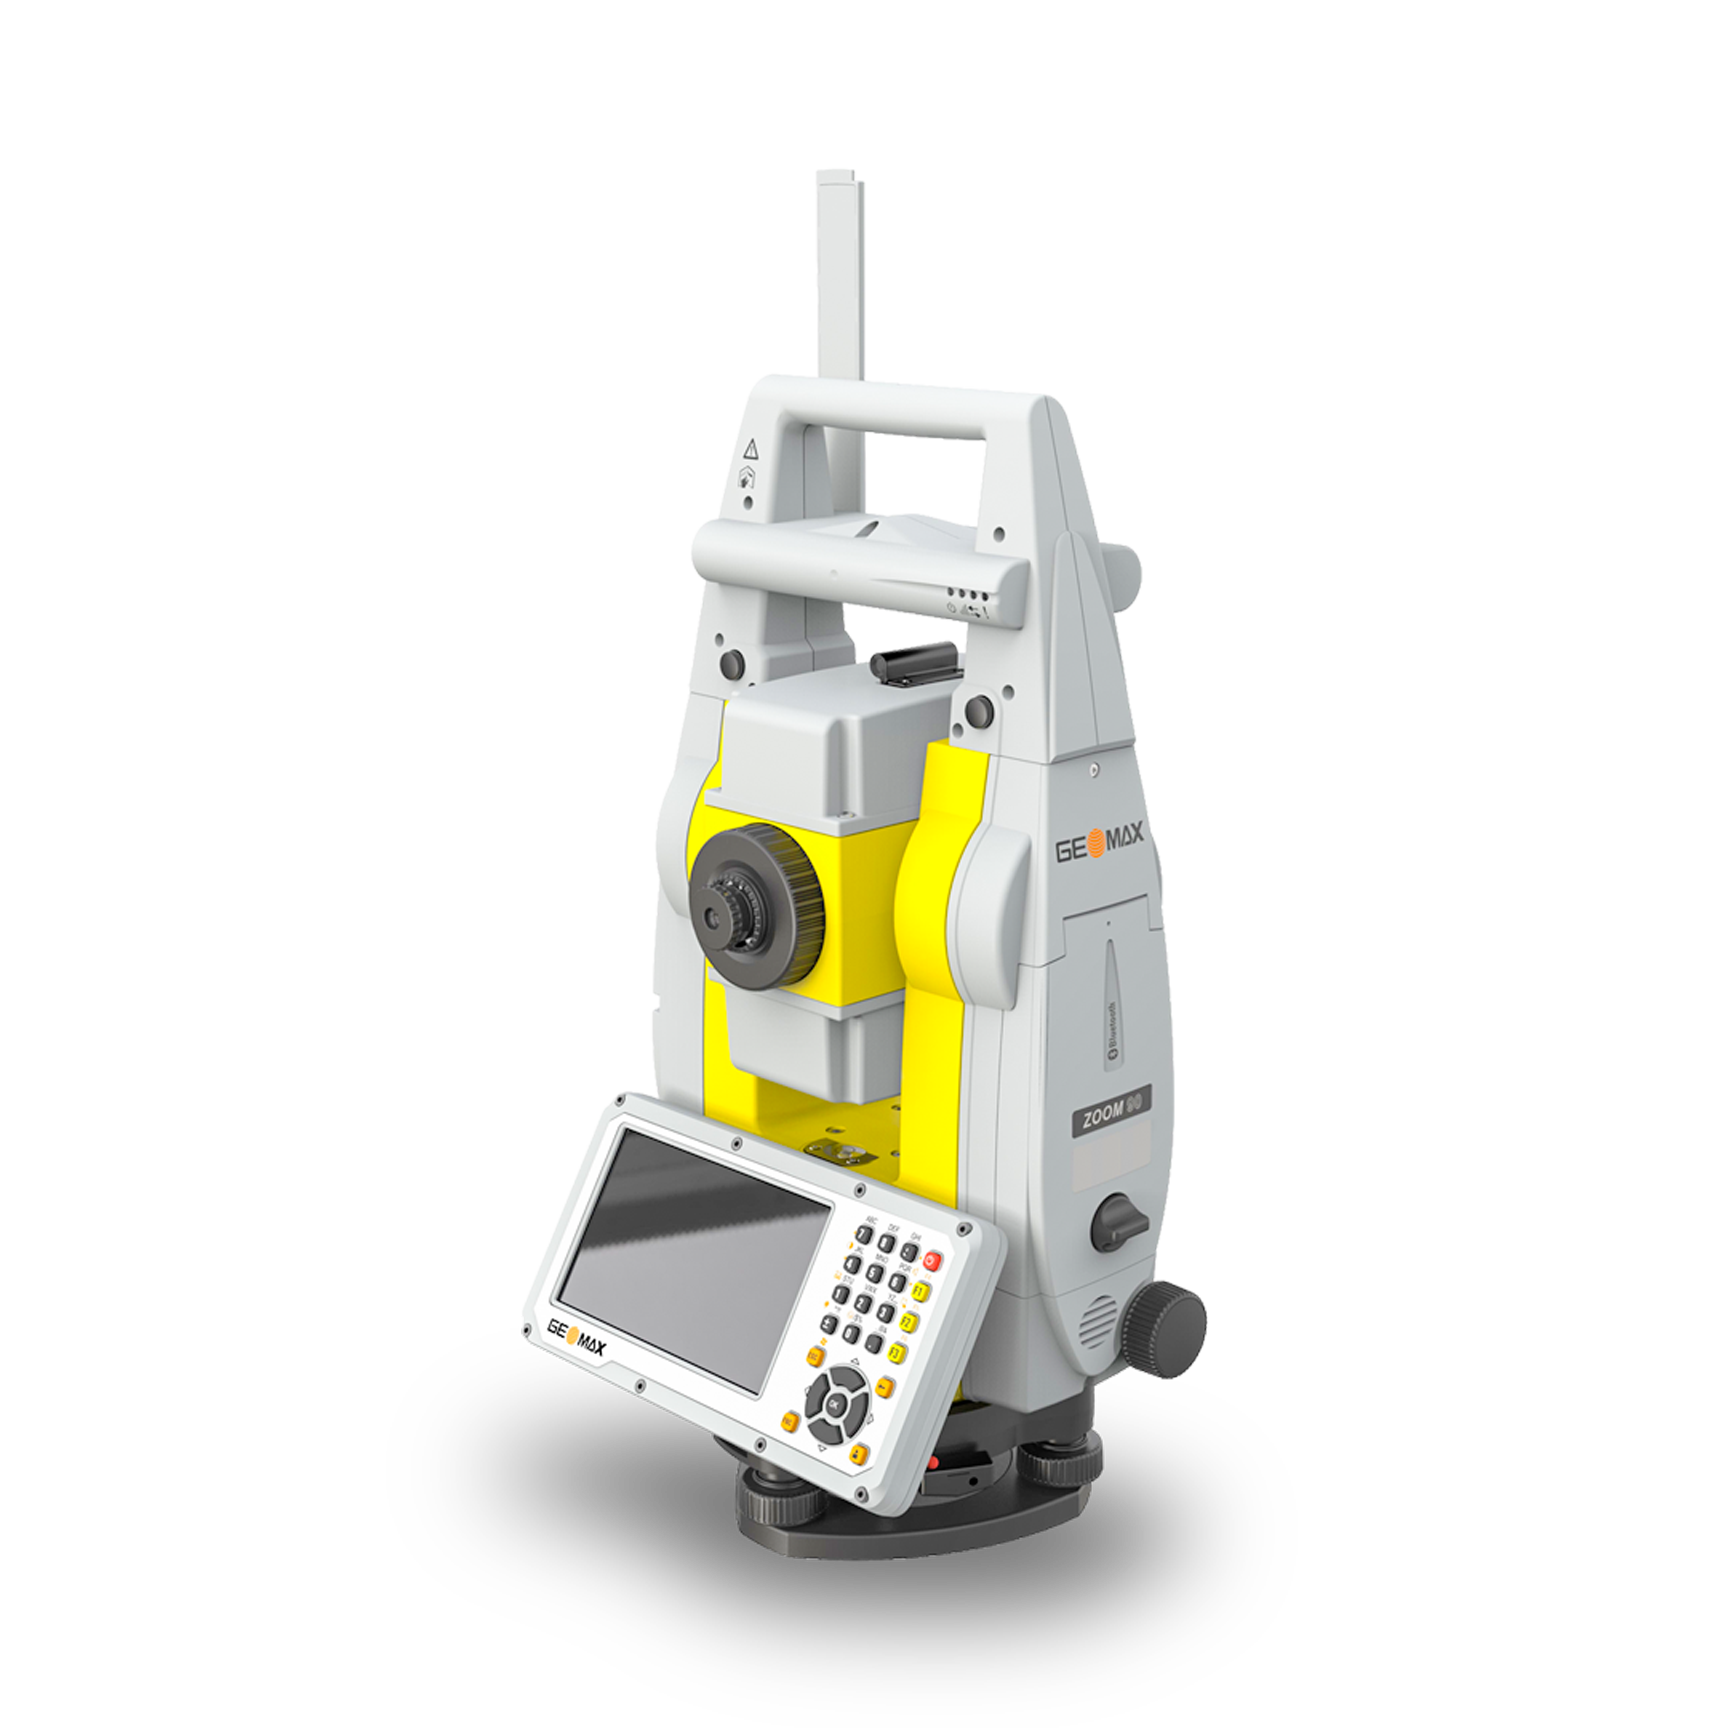 Zoom95 - Robotic Total Station